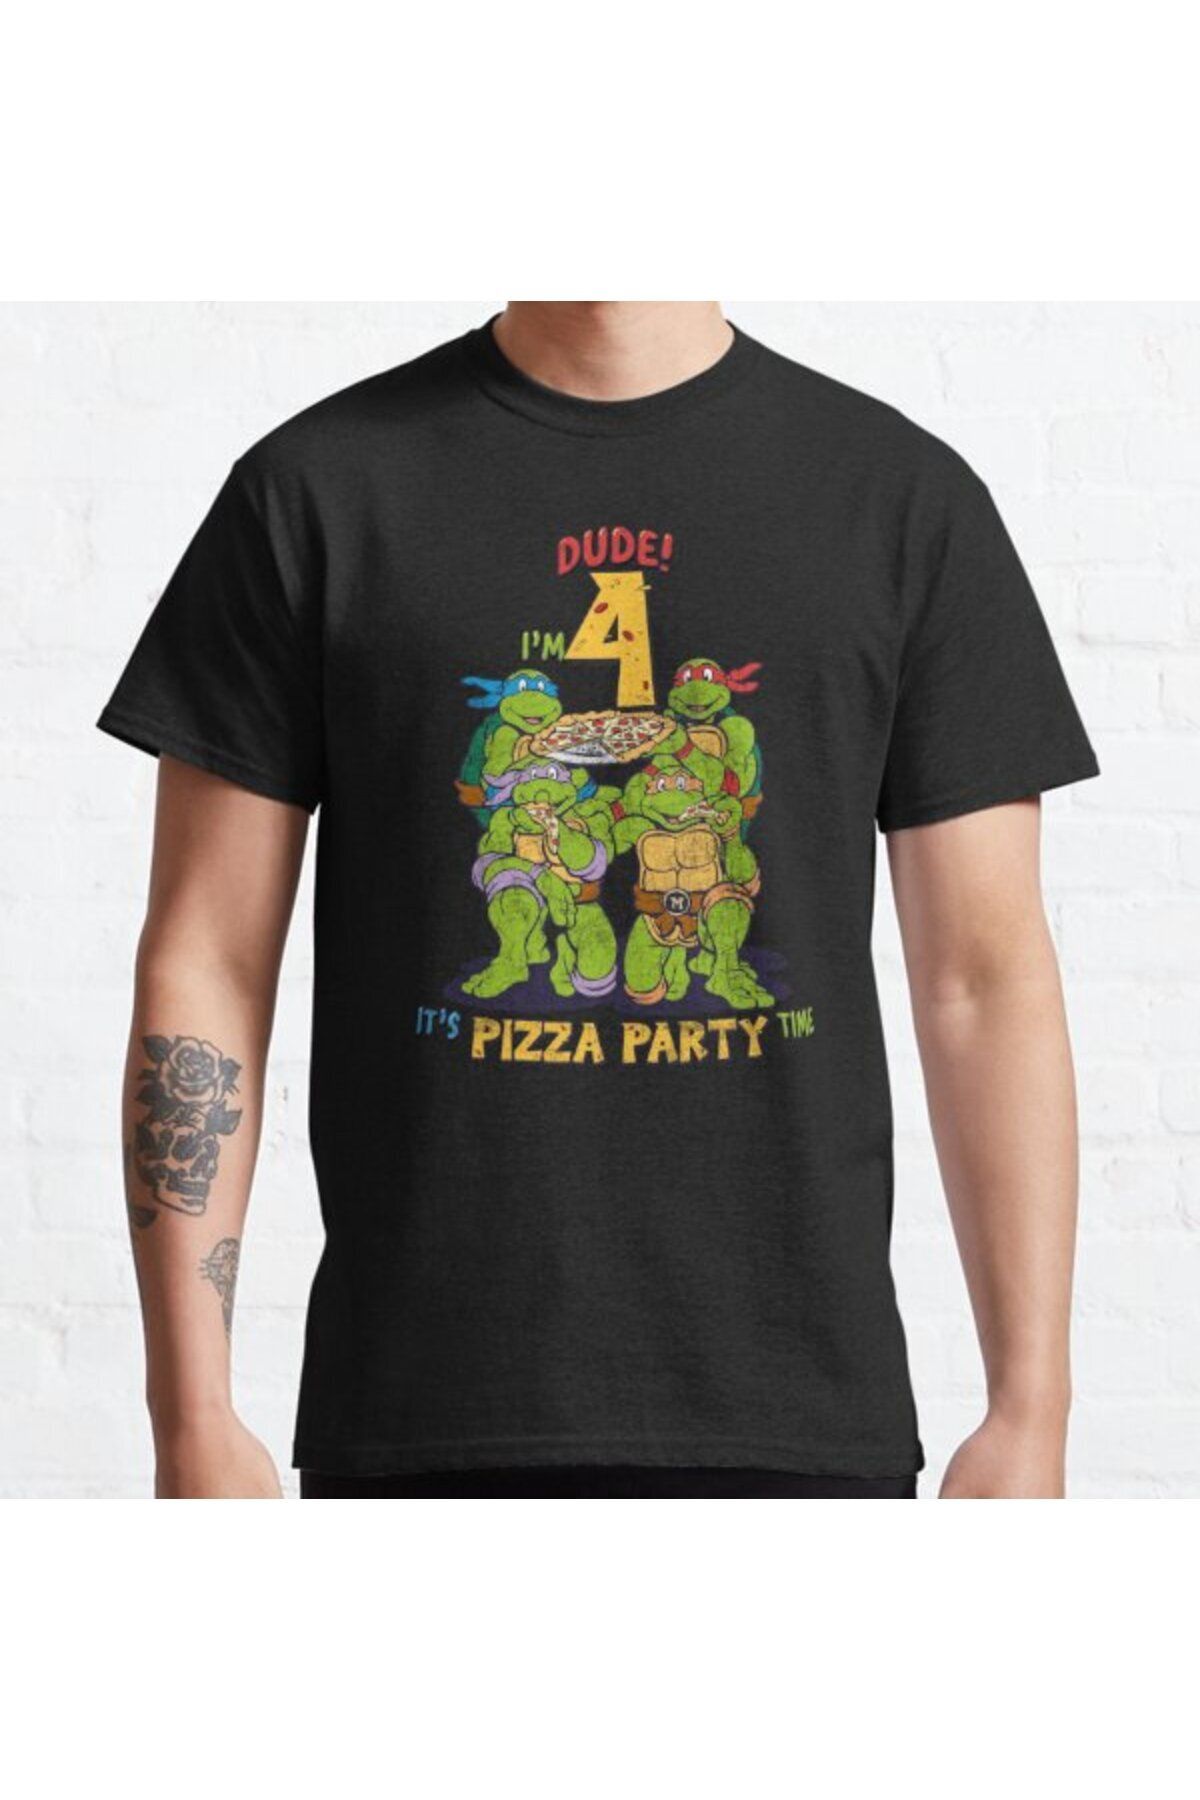 ZOKAWEAR Bol Kalıp Unisex Teenage Mutant Ninja Turtles I'm 4 Dude Pizza Birthday Party Tasarım Baskılı Tshirt